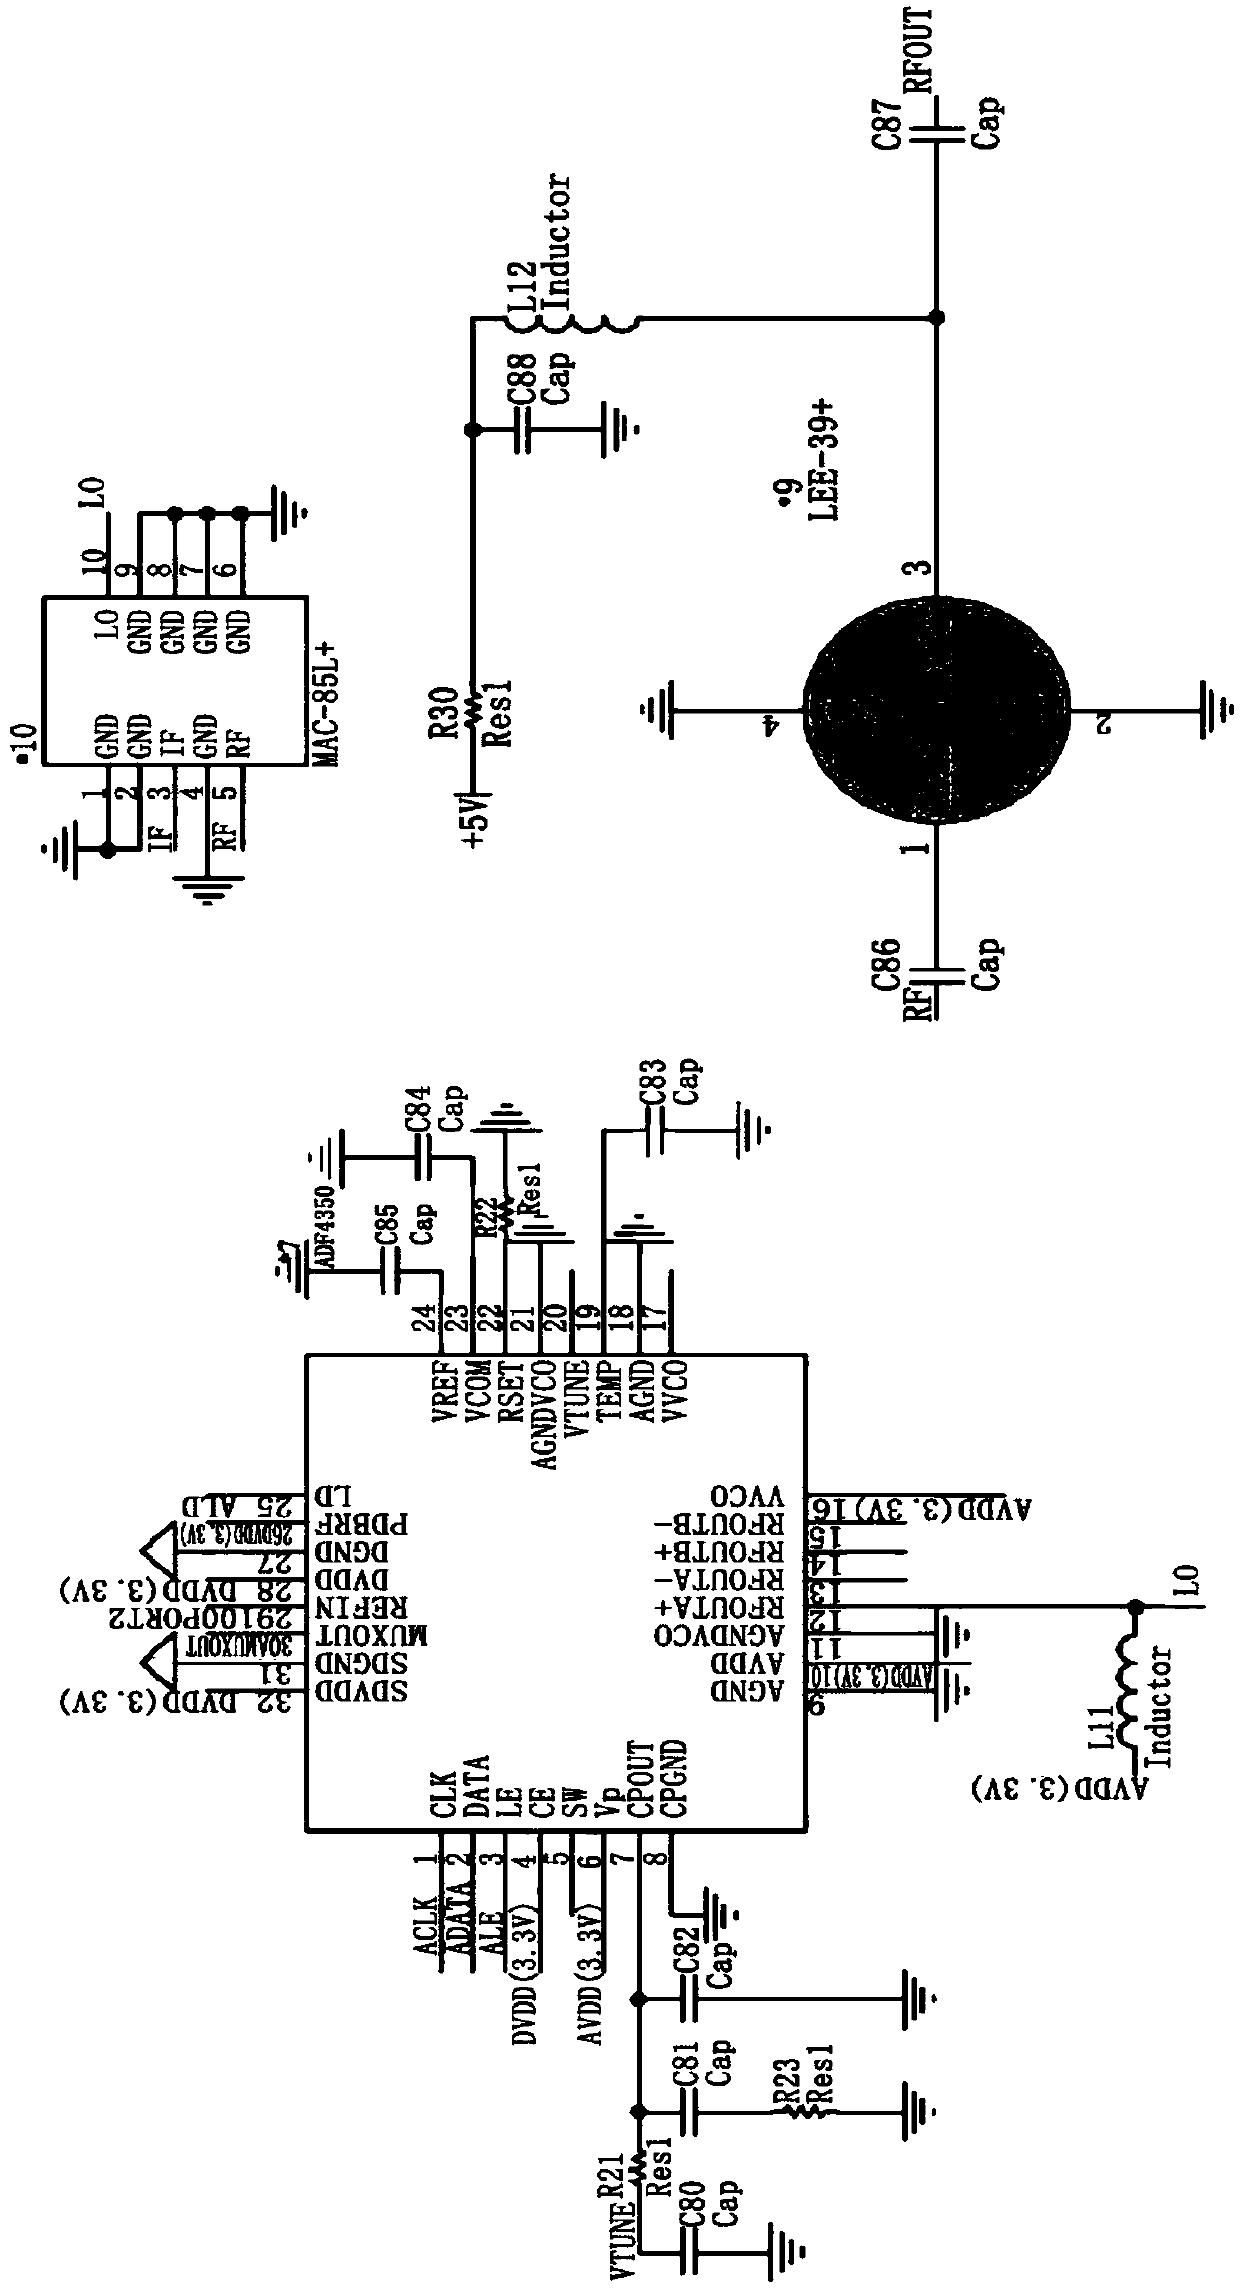 S-band segmented multi-ary chirp modulation wireless communication system and communication method thereof